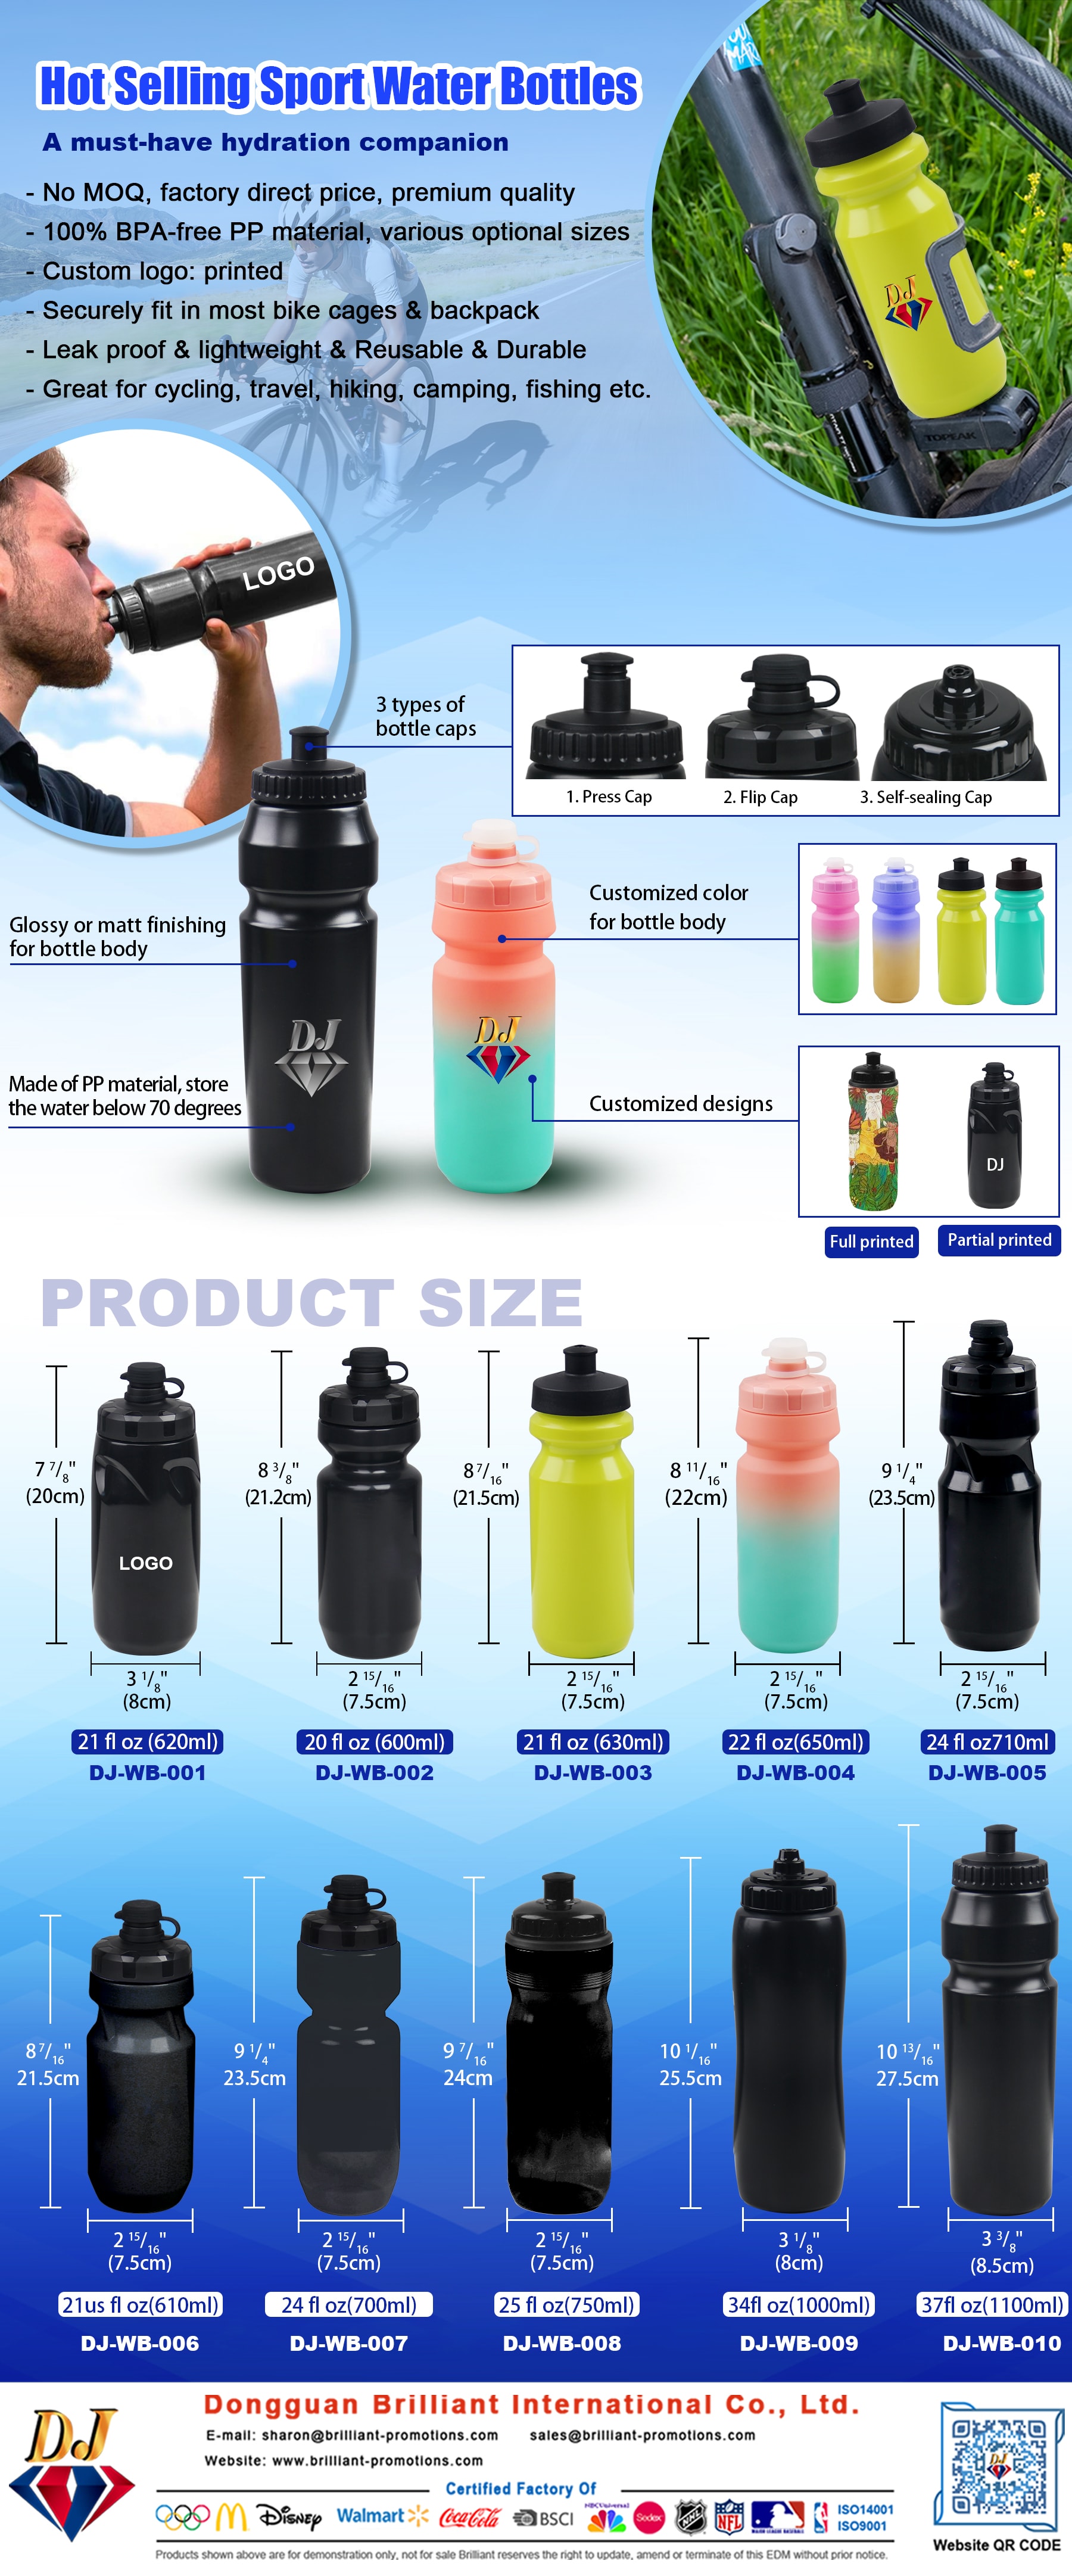 Hot Selling Sport Water Bottles